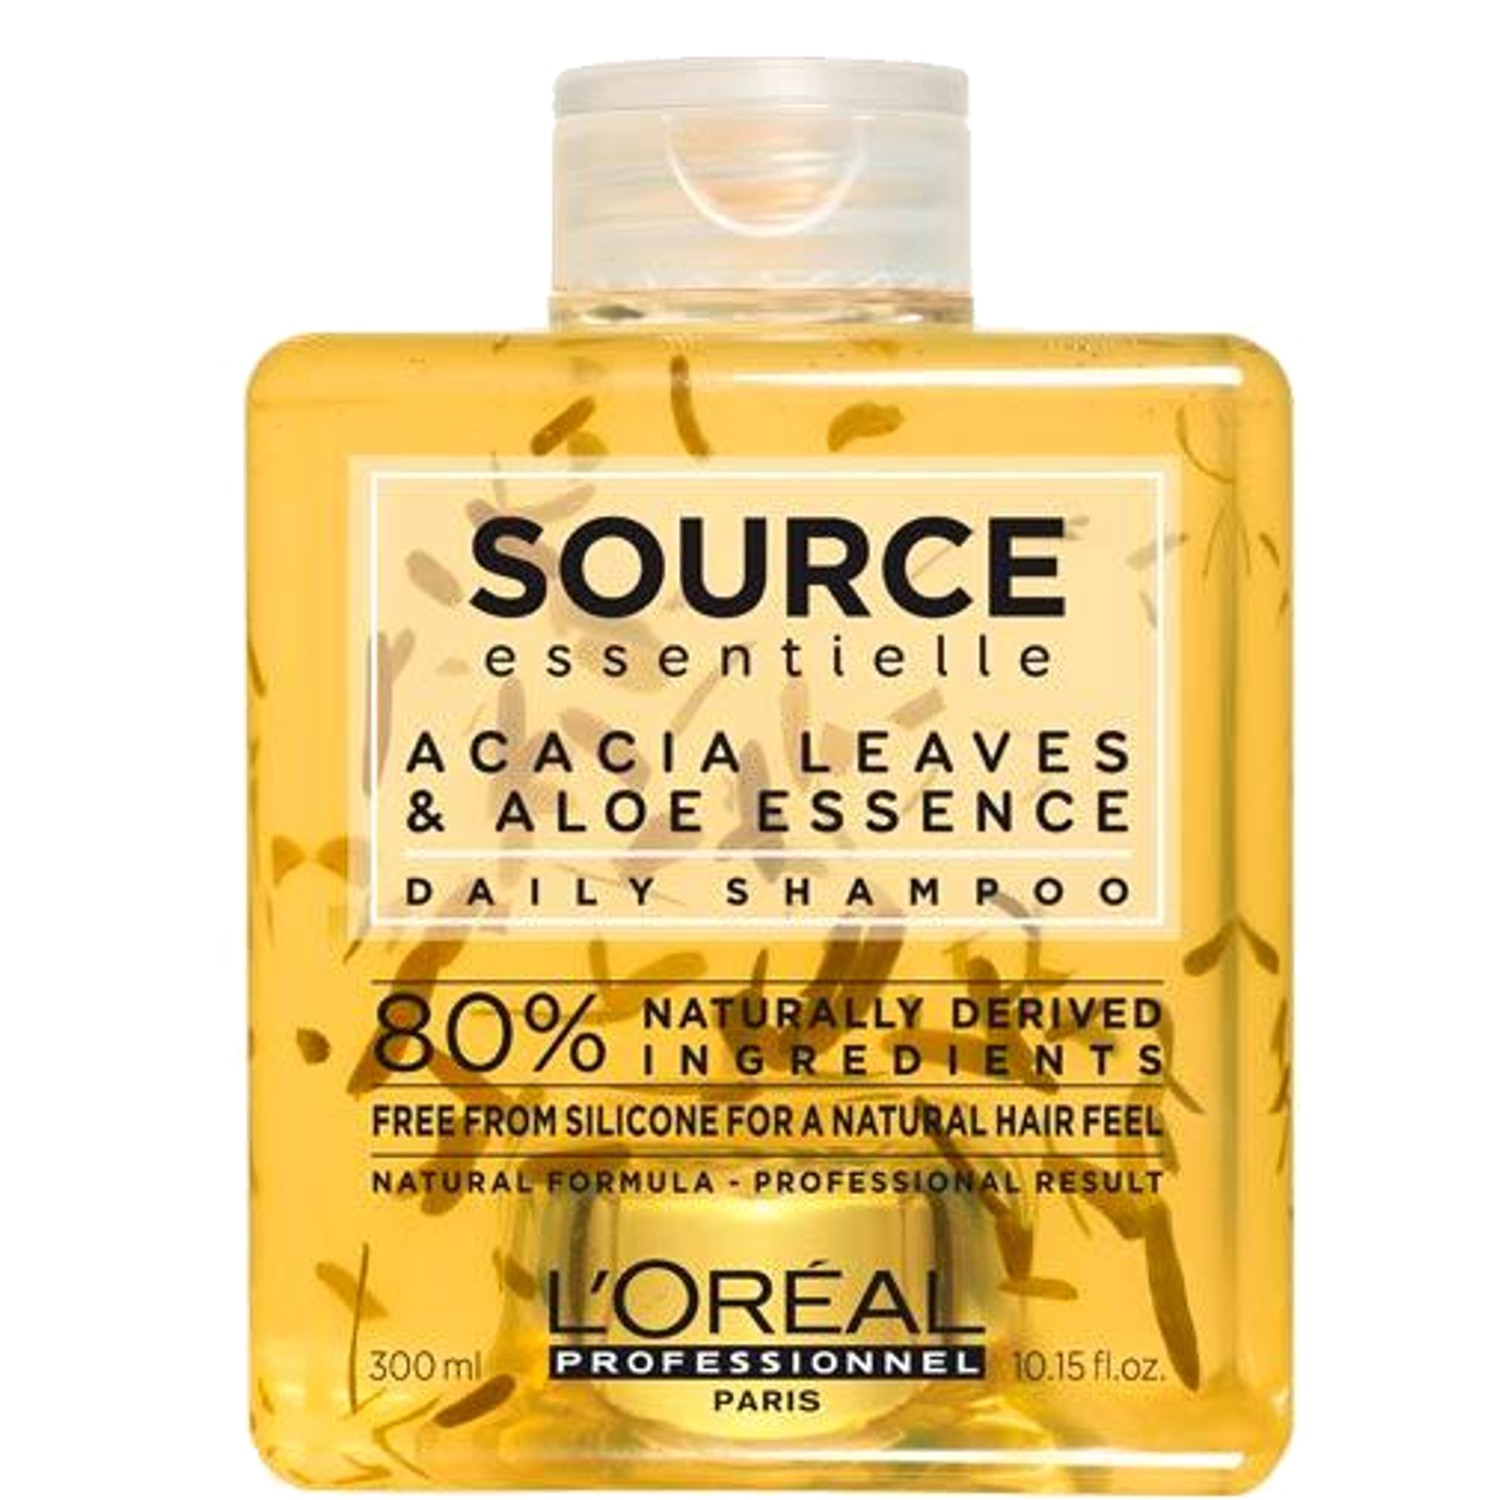 L'Oréal SOURCE ESSENTIELLE Daily Shampoo 300 ml